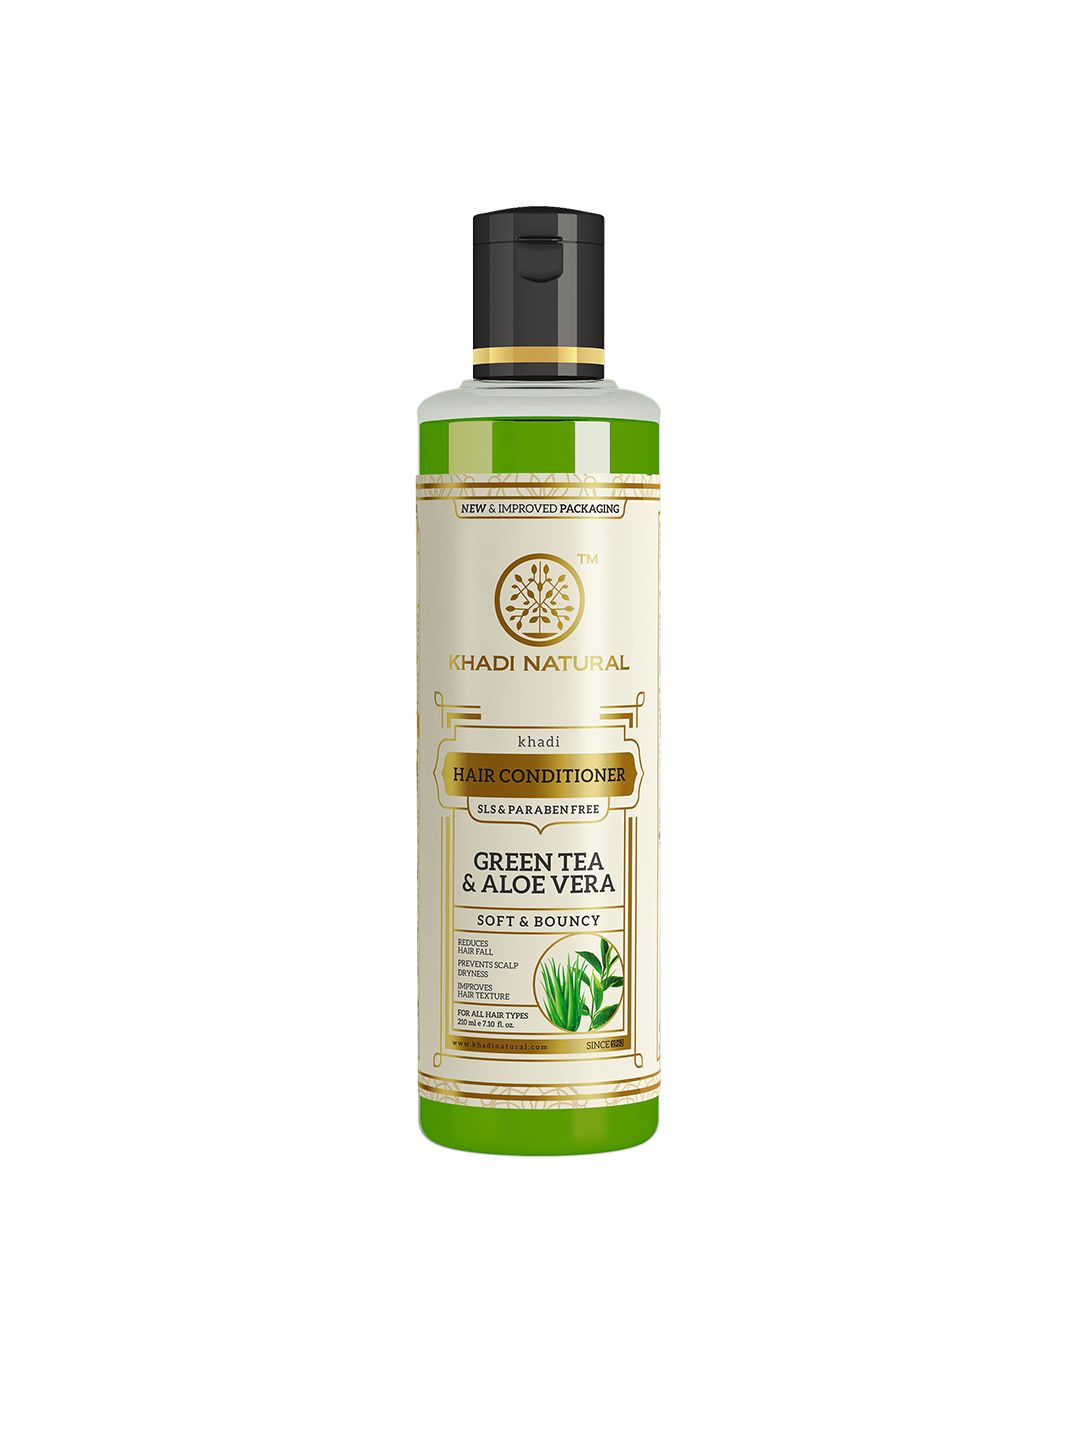 Khadi Natural Unisex Green Tea & Aloe Vera Herbal Hair Conditioner 210 ml Price in India